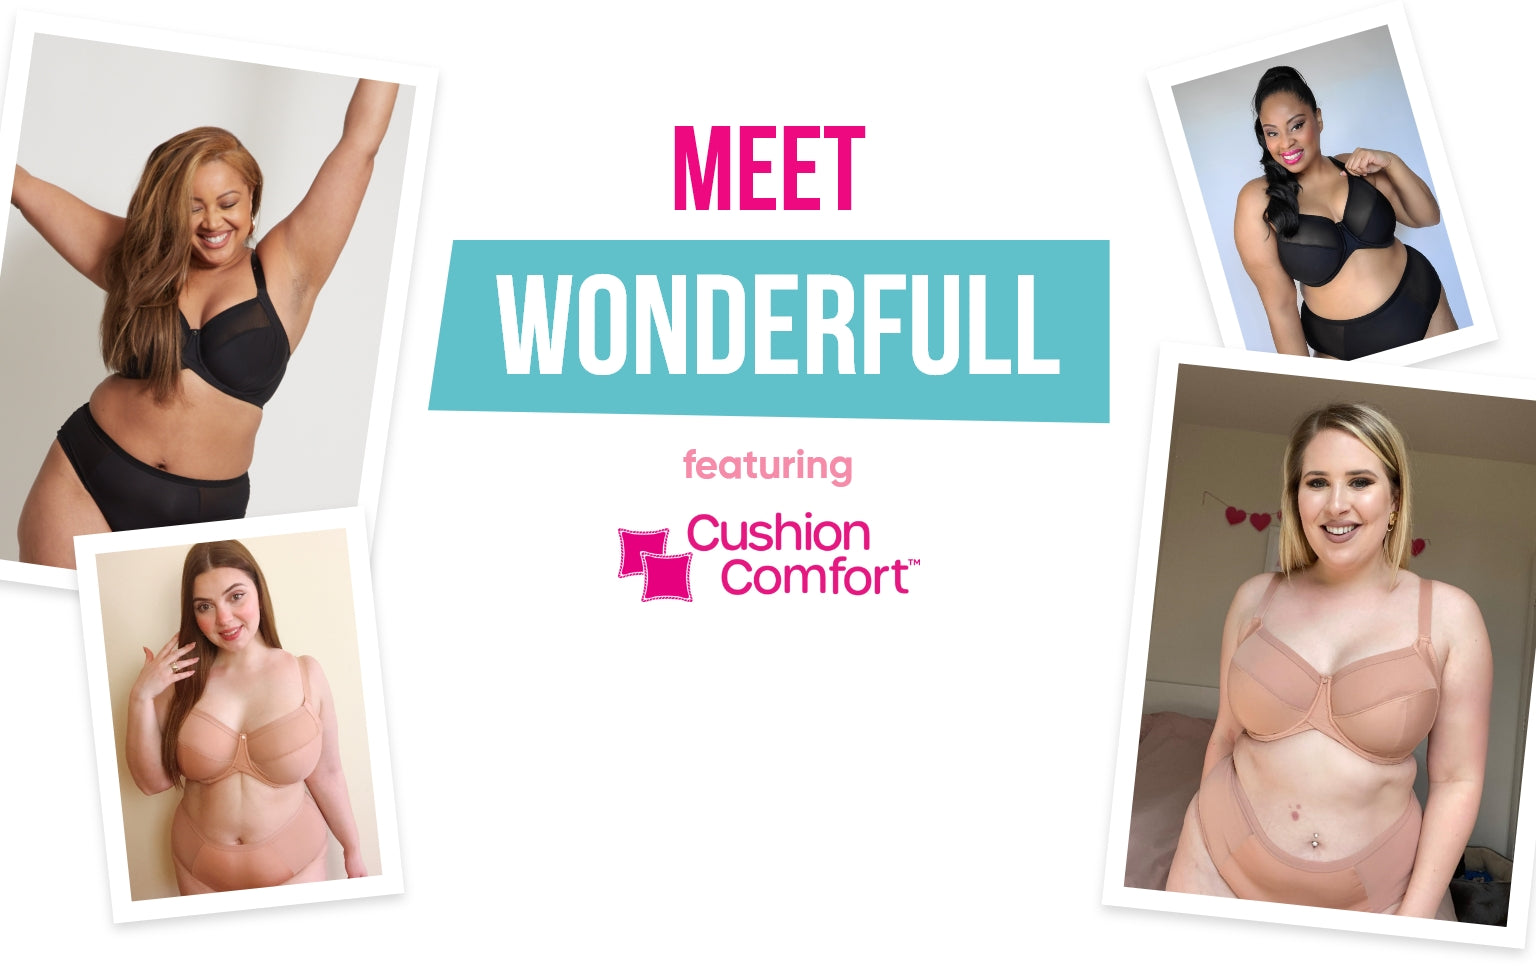 Meet Wonderfull, featuring Cushion Comfort